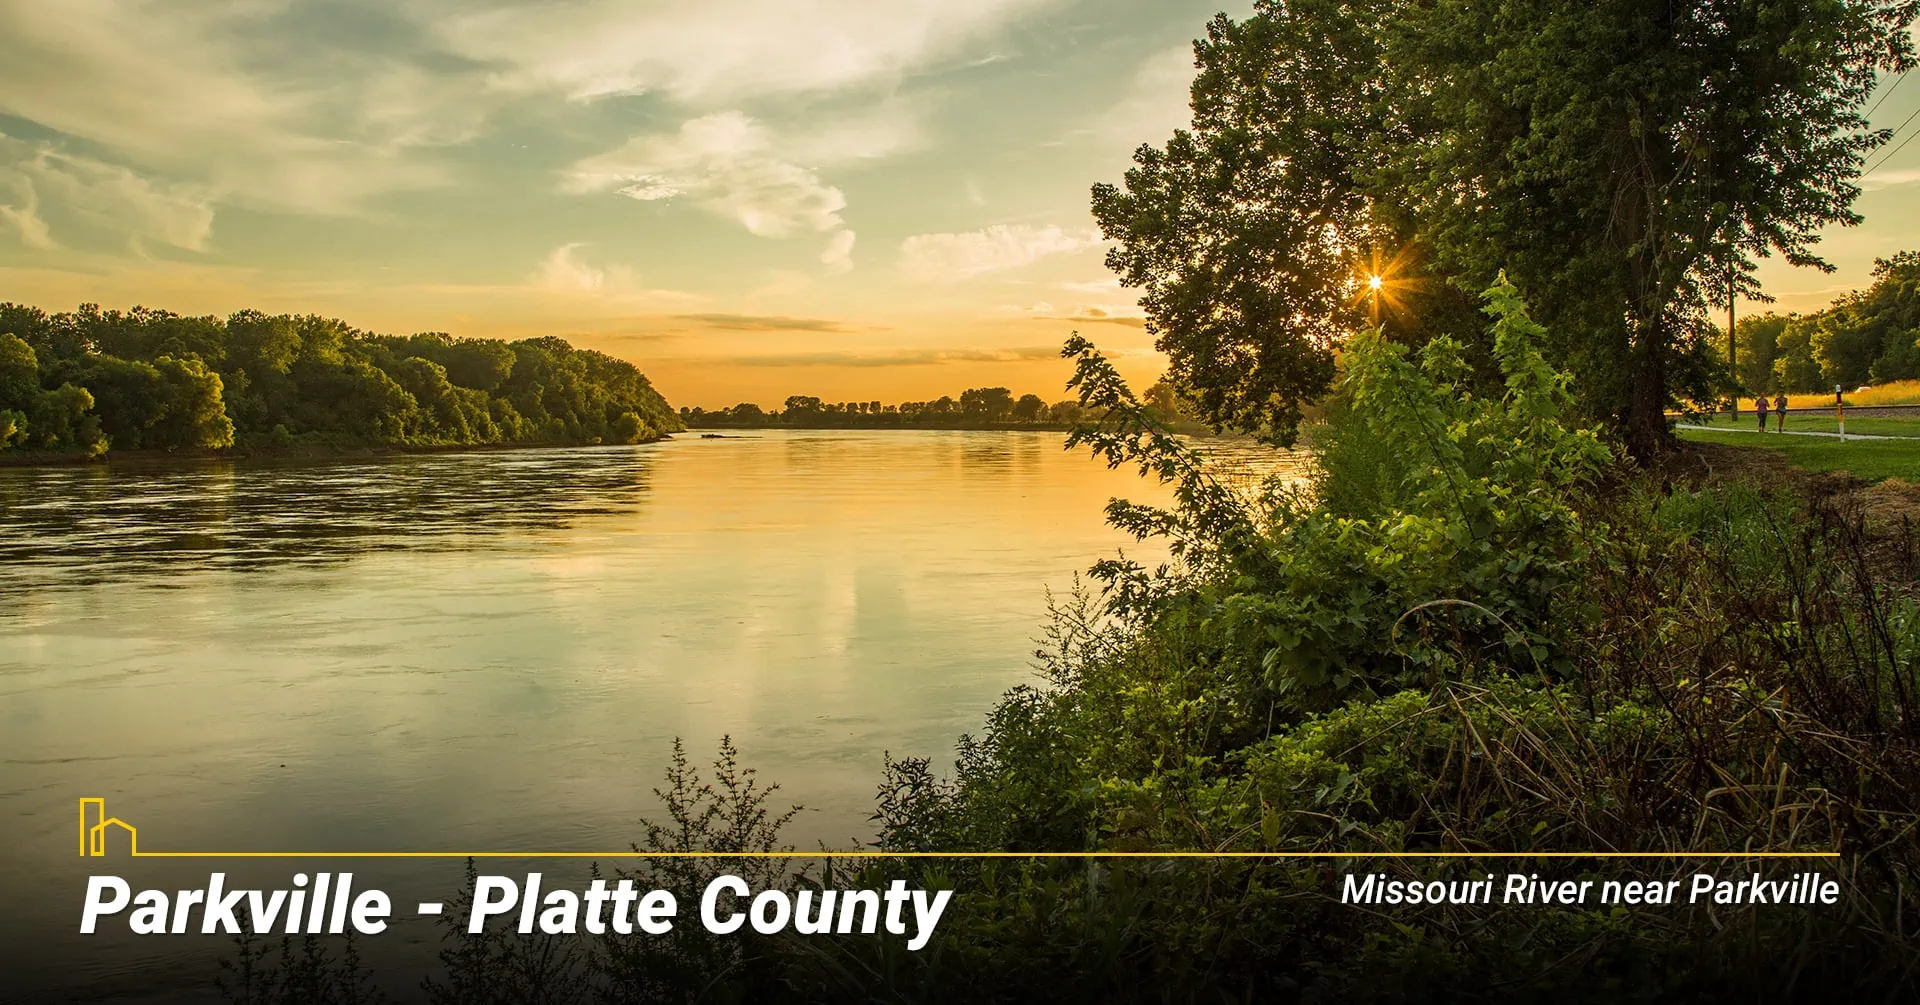 Parkville - Platte County